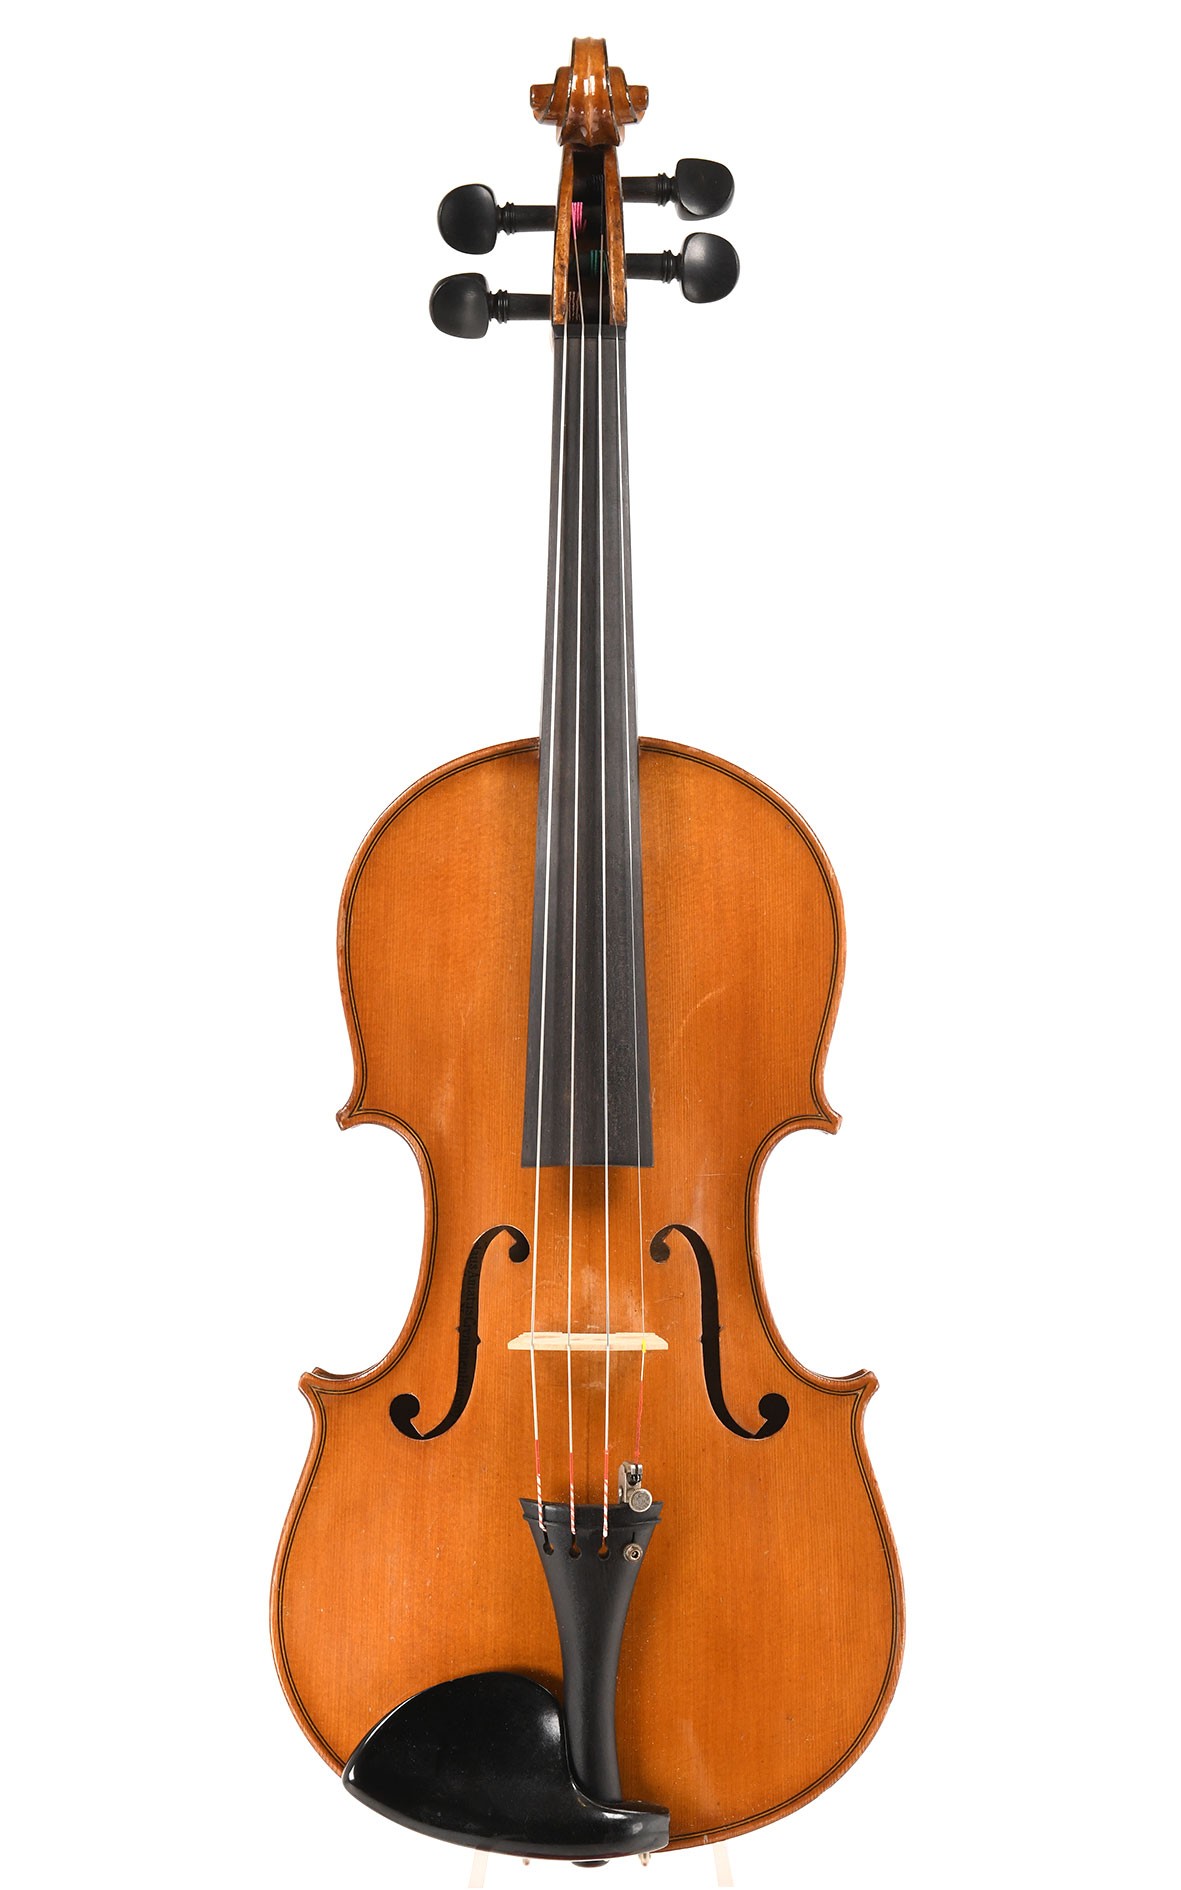 Sarasate Maitre: French violin by Laberte of their premum Sarasate series